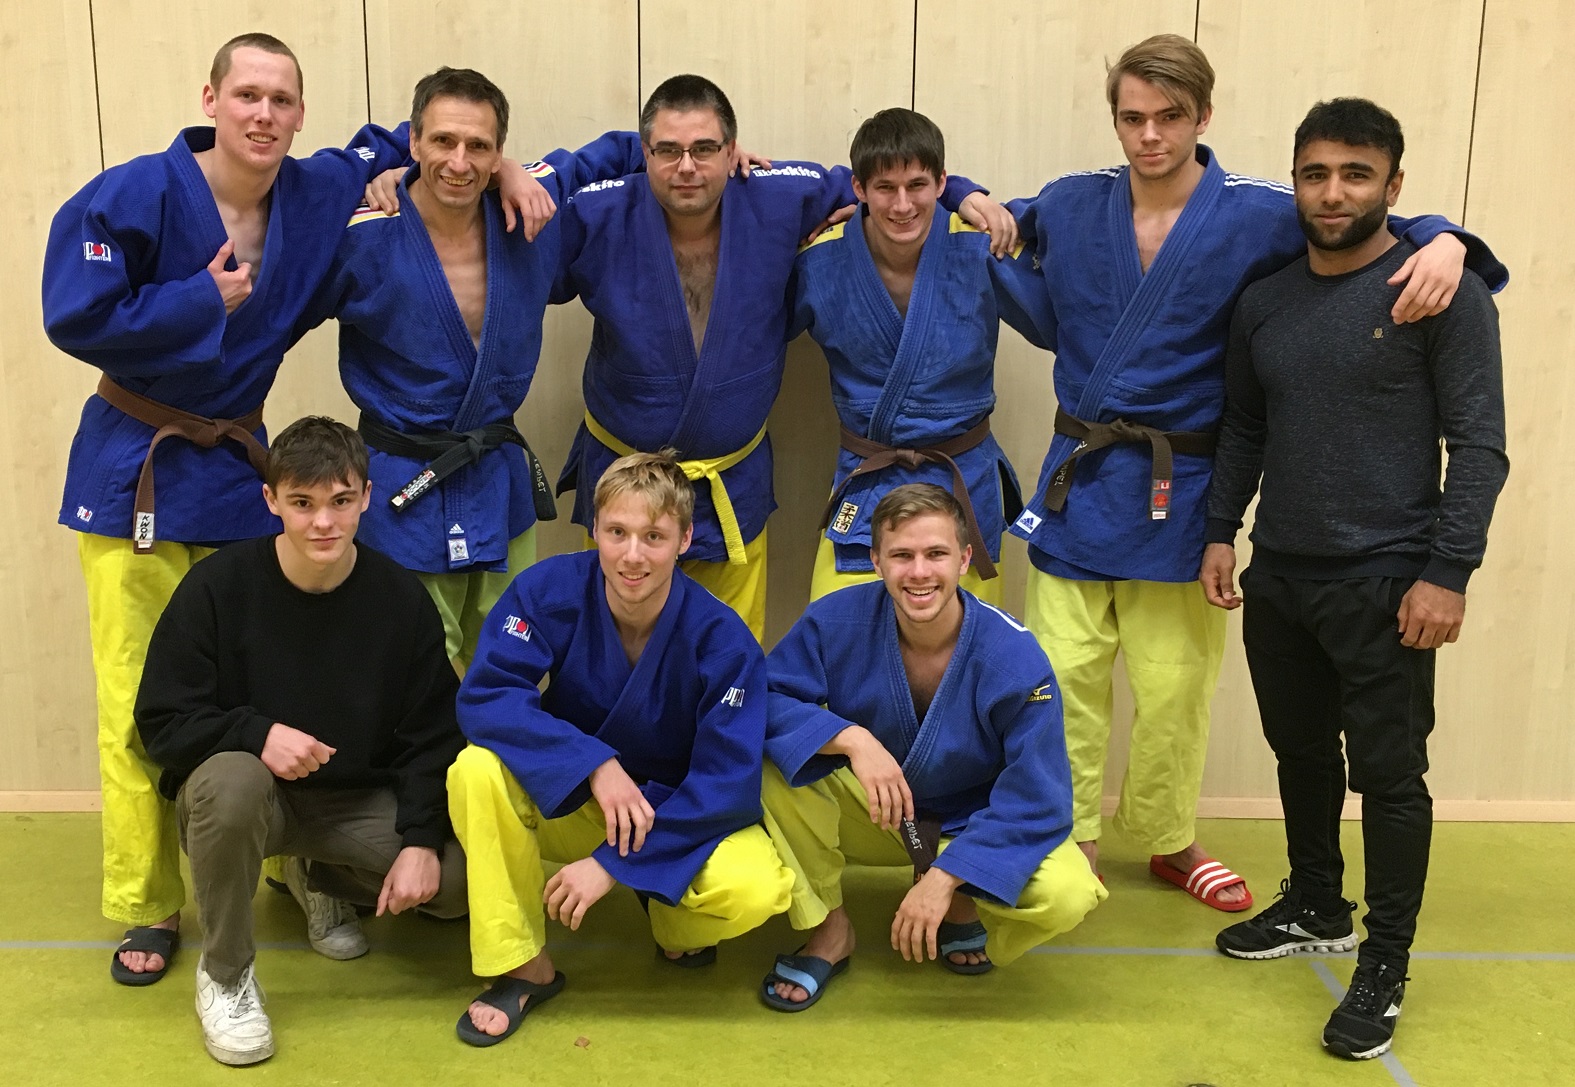 2019 11 23 Landesliga 4 Kampftag in Schwelm Judoka Rauxel